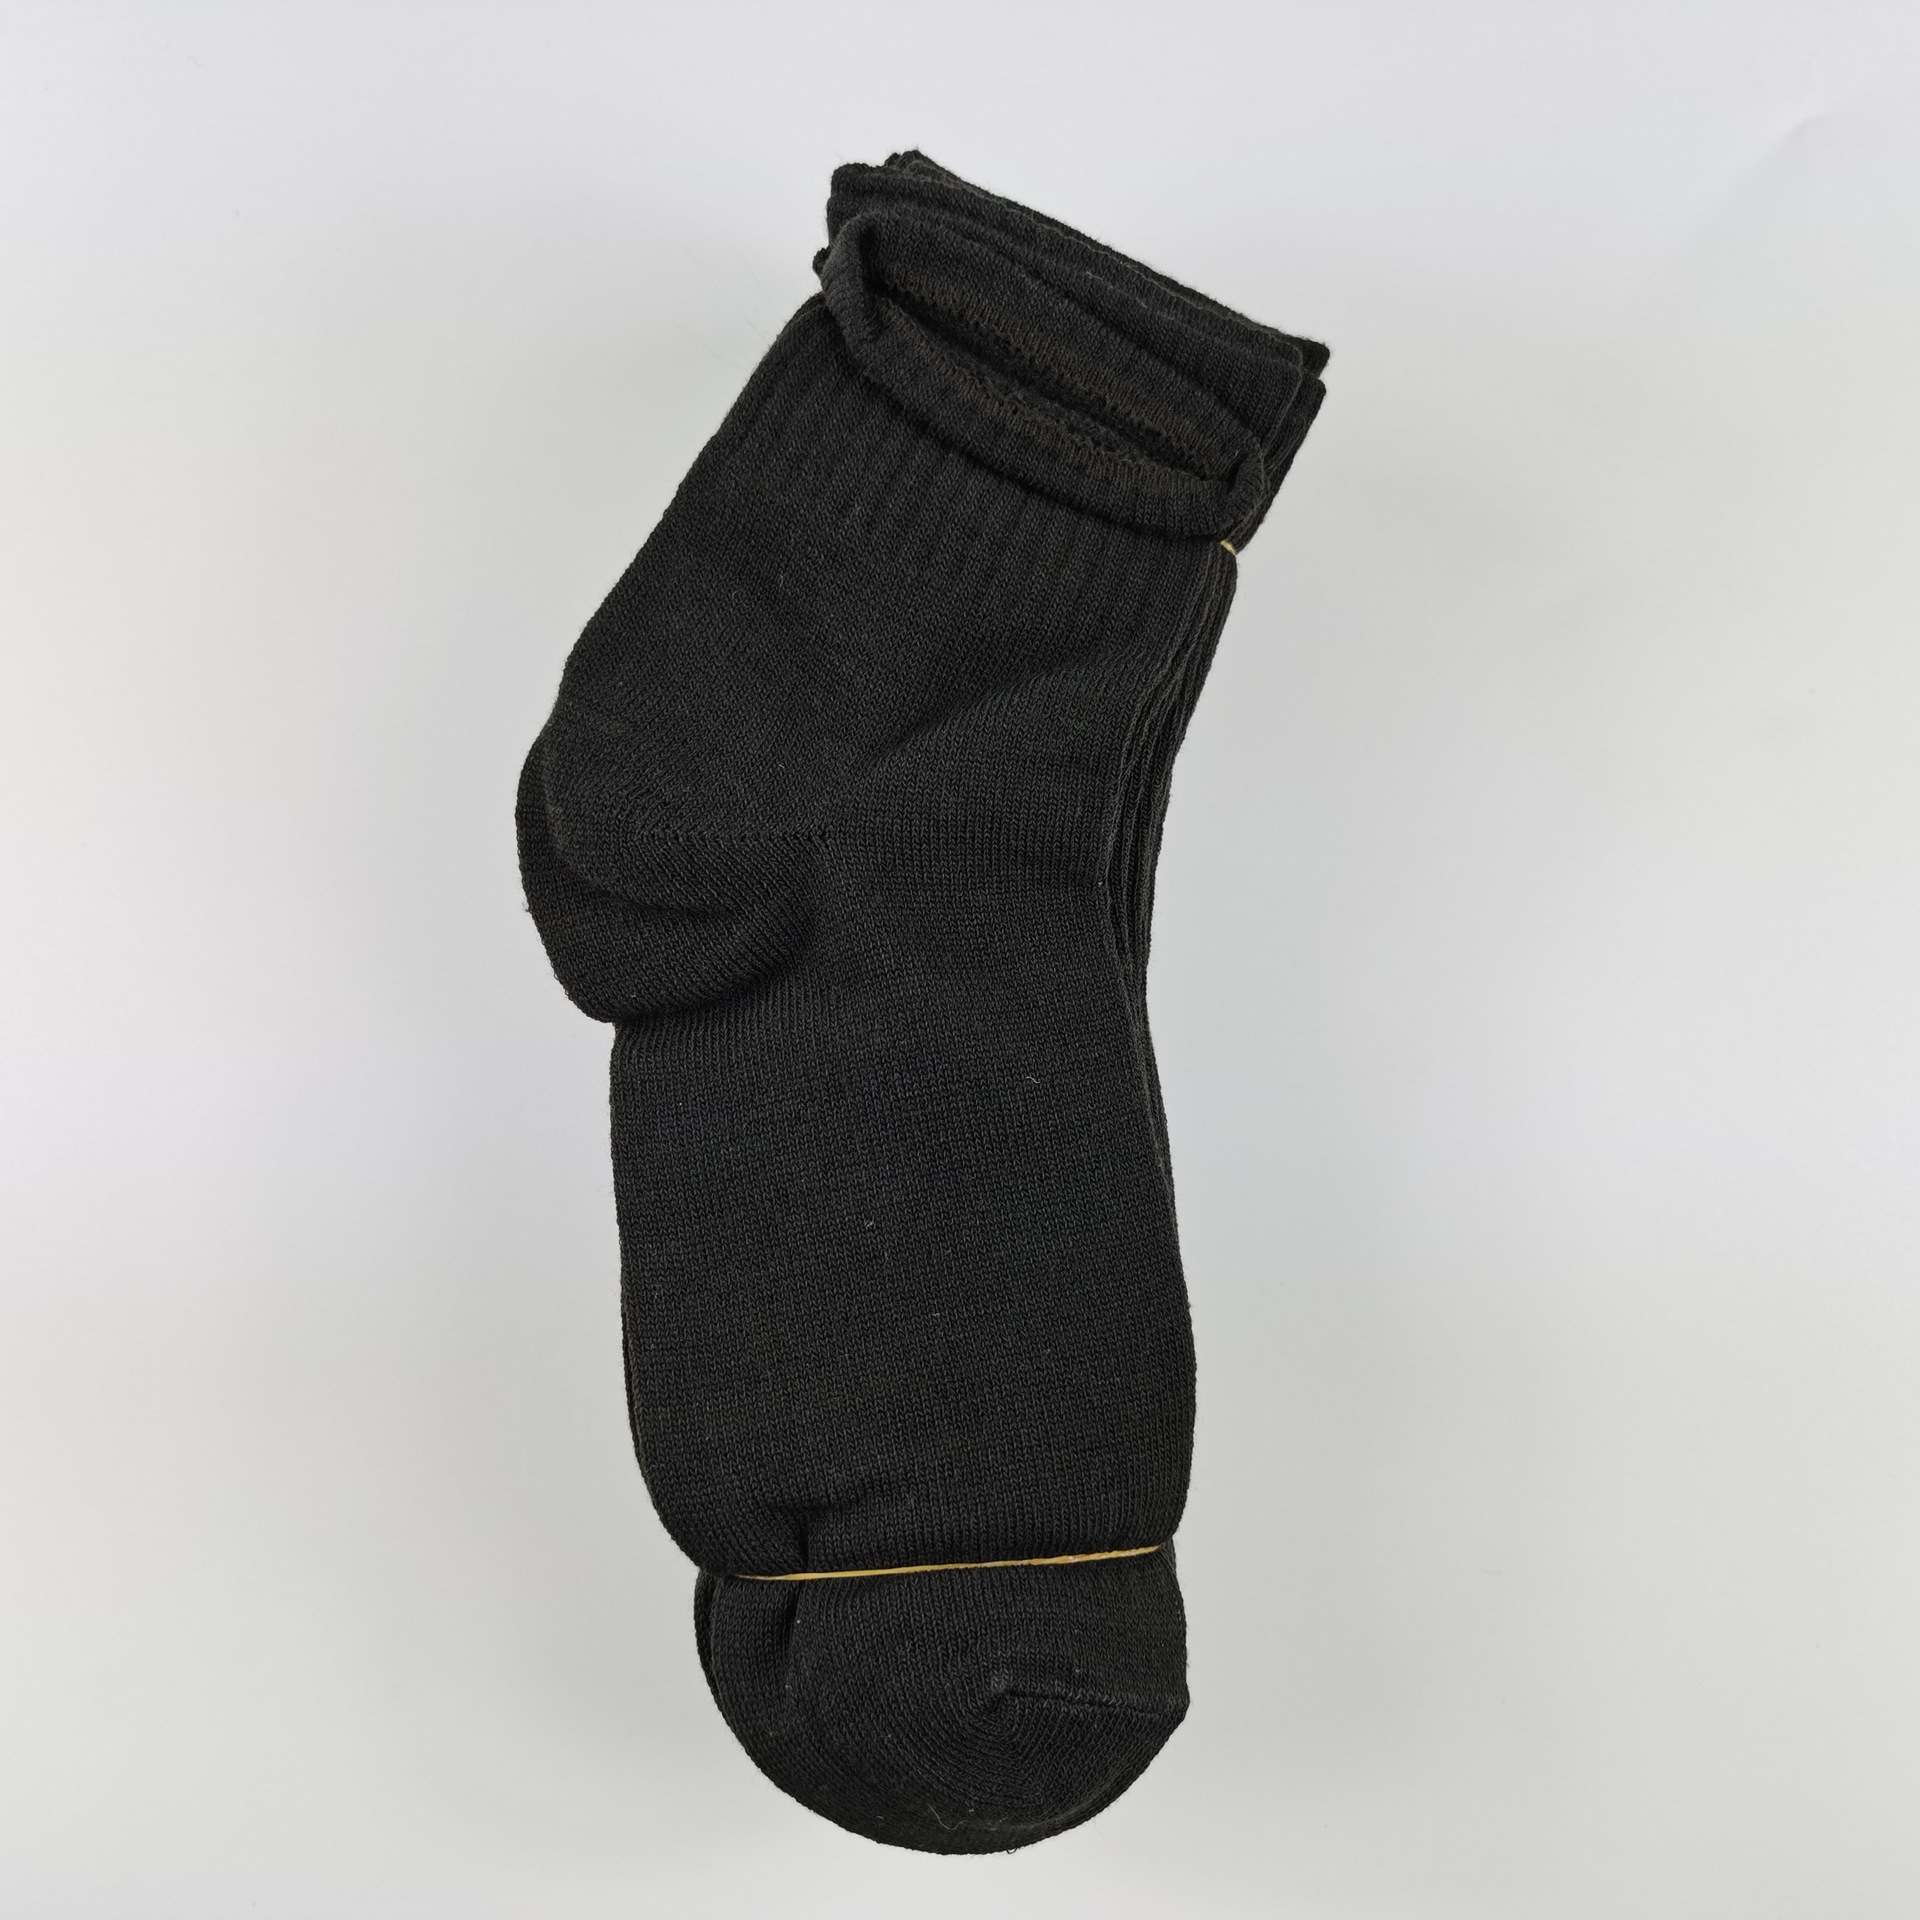 Zhuji Socks Men's Stall Hot Selling Supply Factory Wholesale Black White Gray Knee-High Sports Socks Polyester Cotton Mesh Breathable